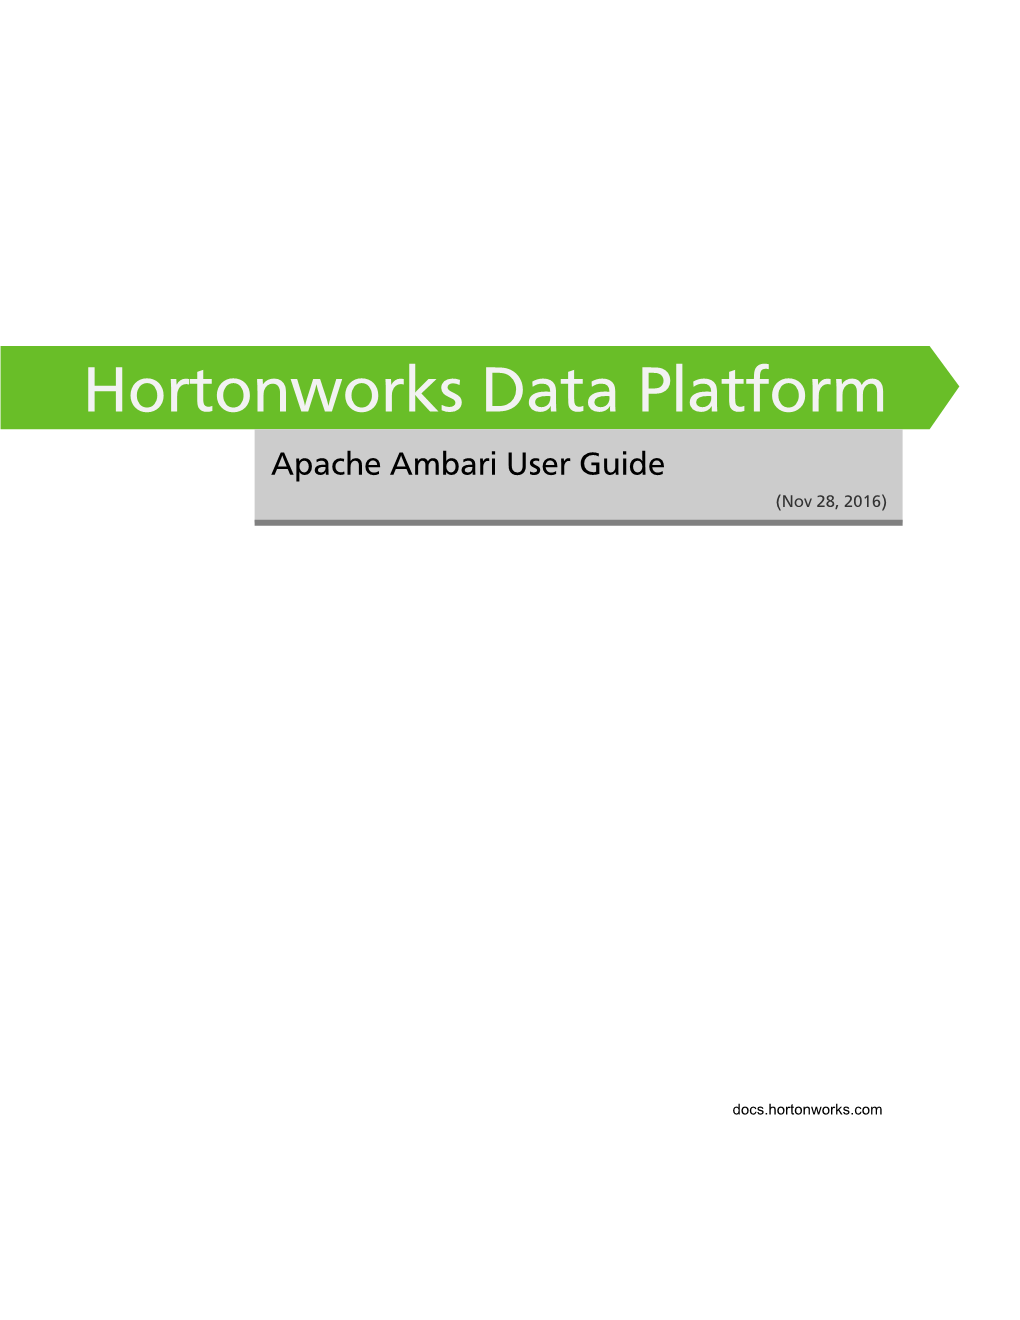 Hortonworks Data Platform: Apache Ambari User Guide Copyright © 2012-2016 Hortonworks, Inc